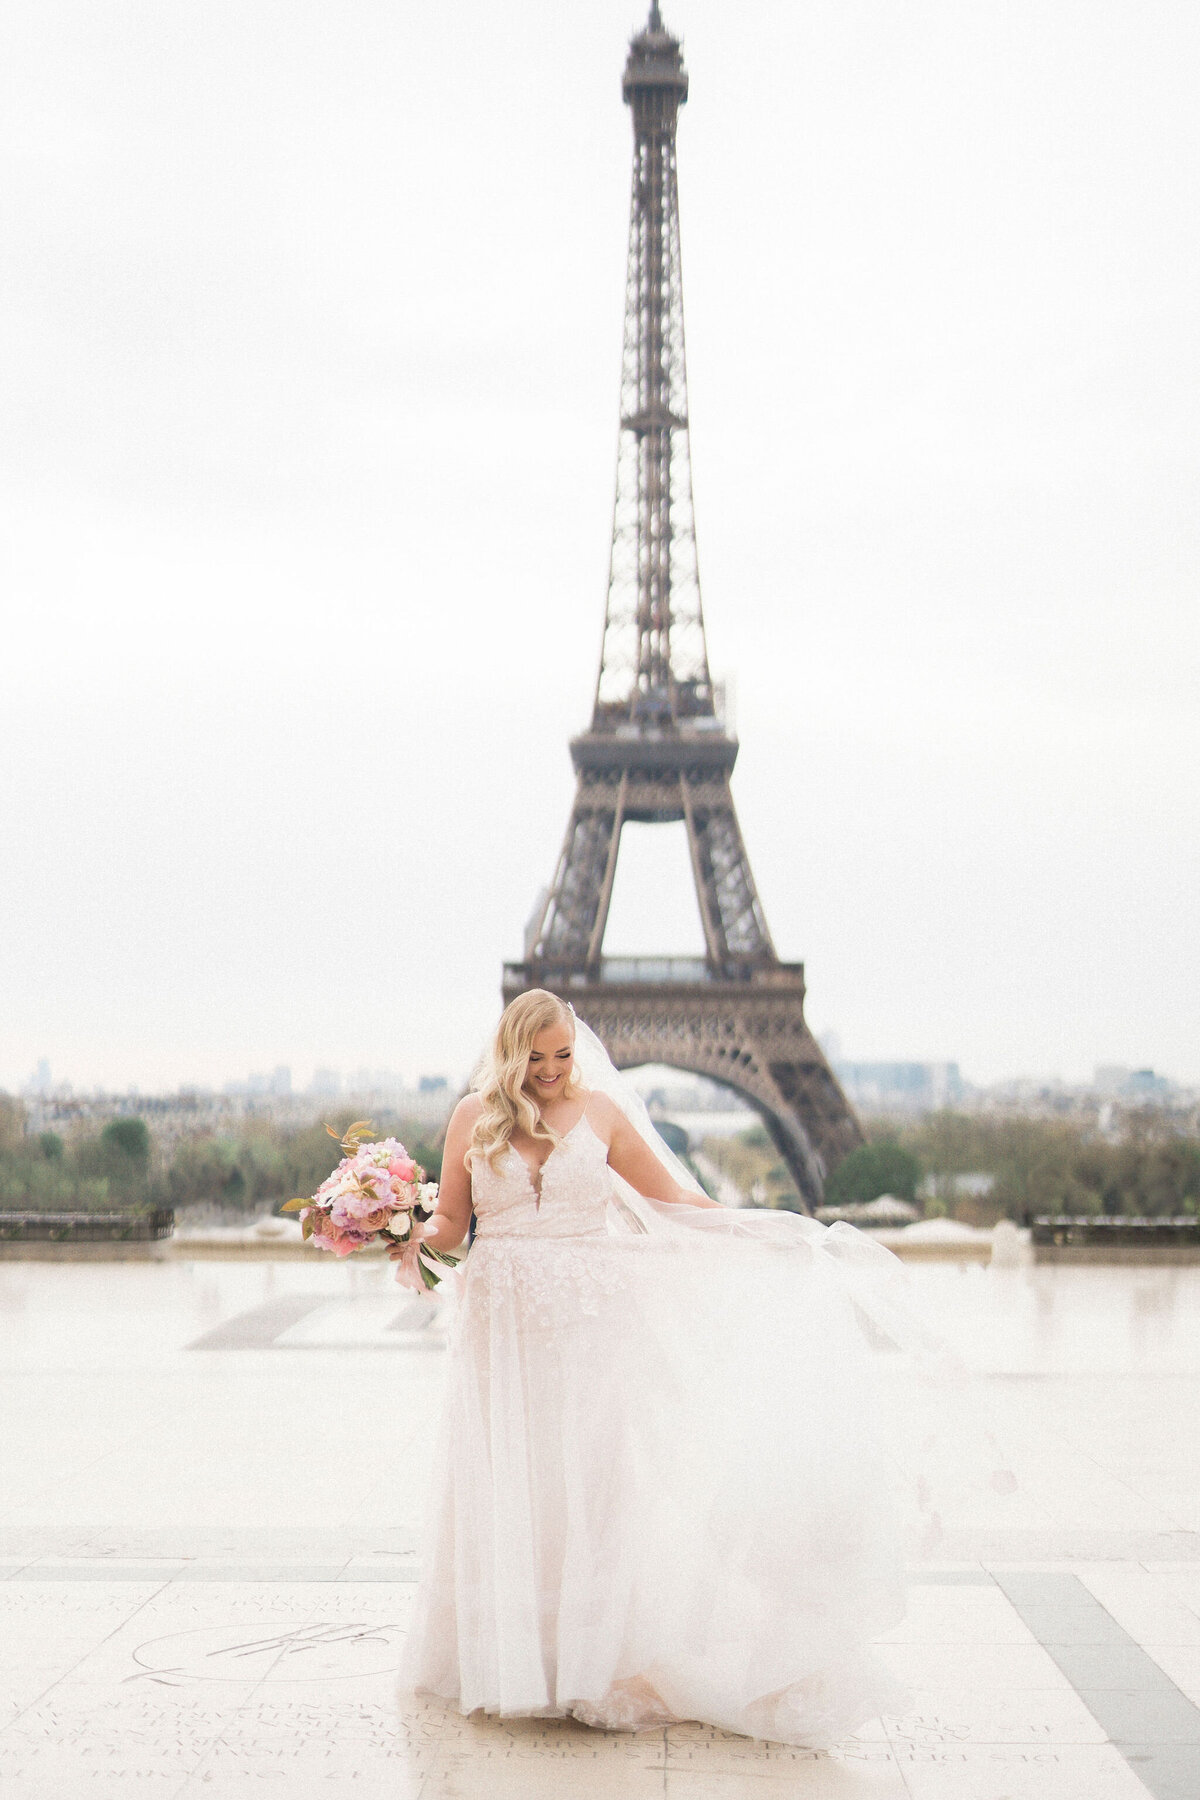 010-Paris-Spring-Blossom-Elopement-Wedding-Cinematic-Editorial-Luxury-Fine-Art-Lisa-Vigliotta-Photography